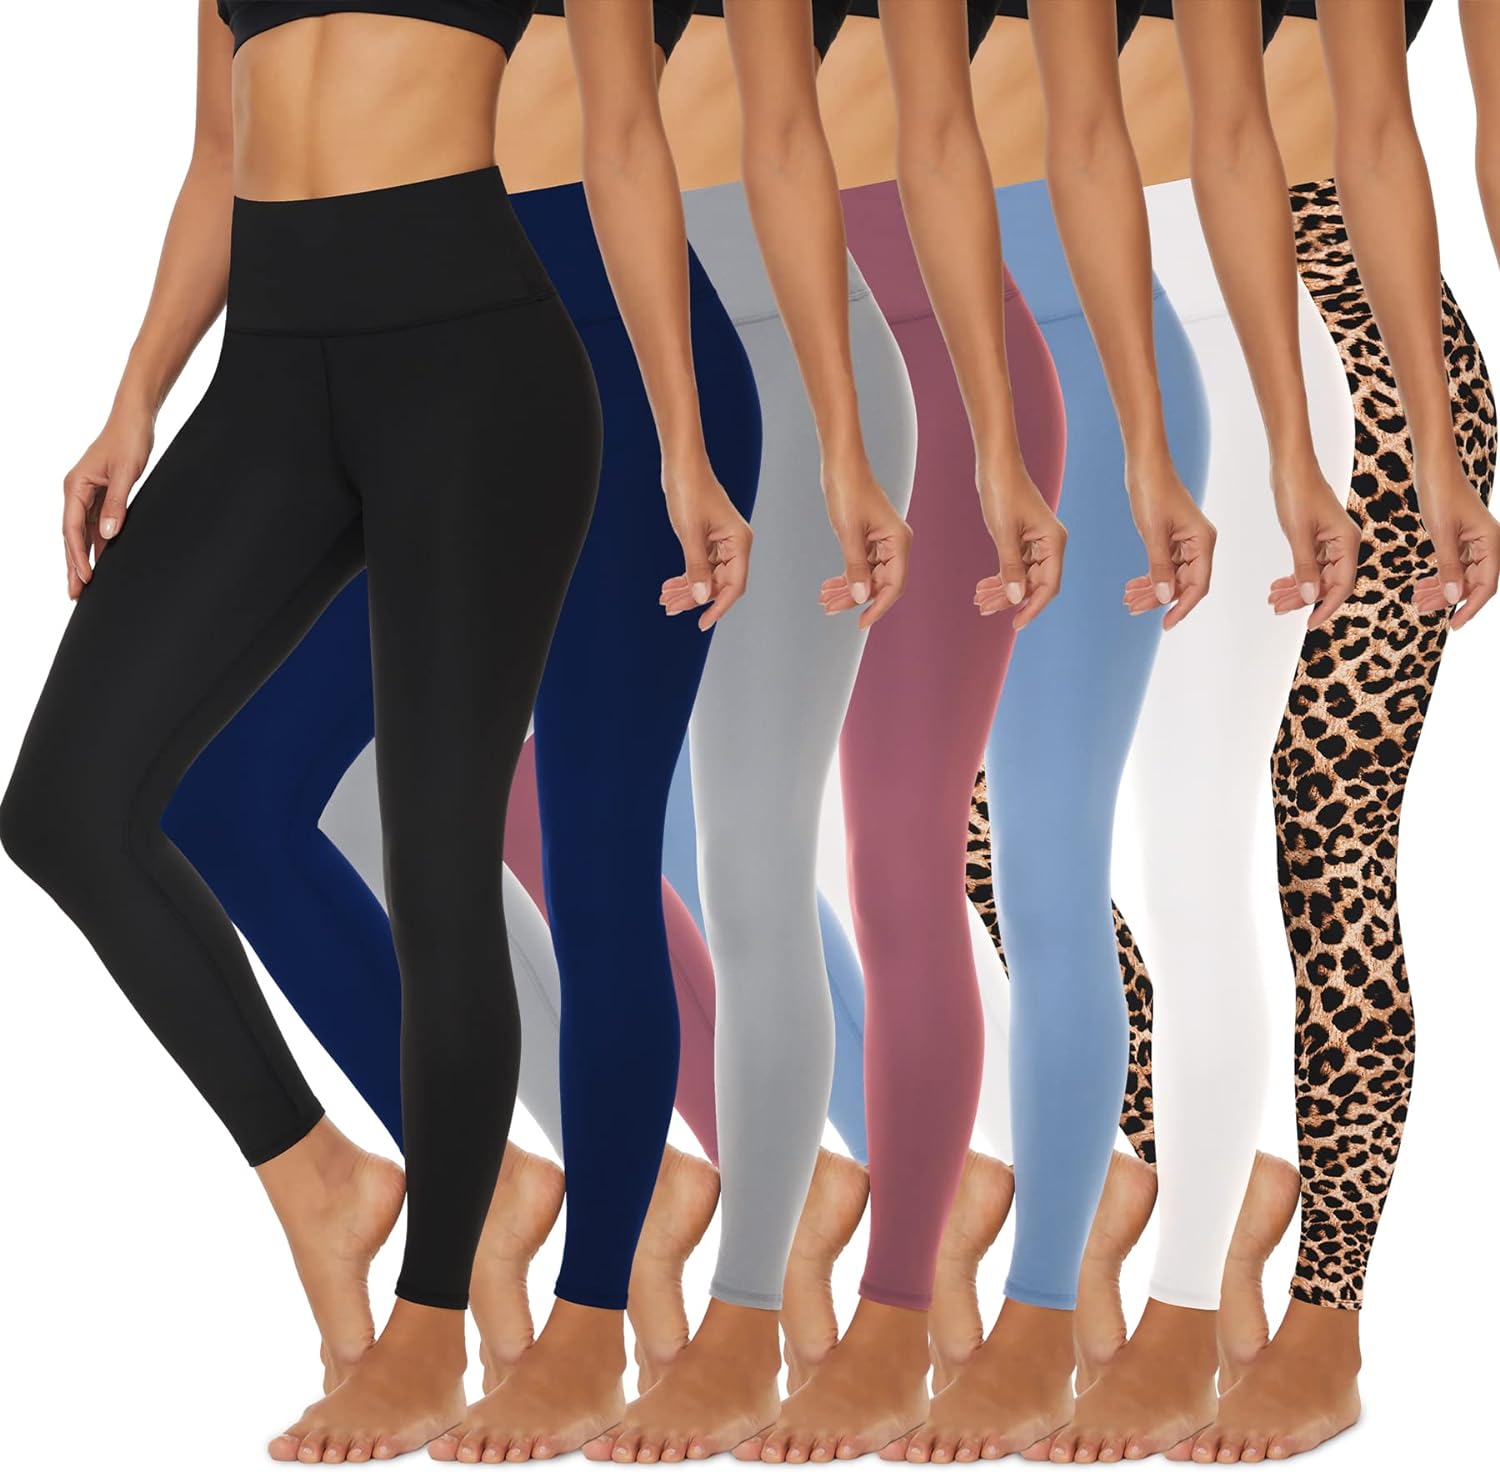 FULLSOFT 7 Pack High Waist Leggings for Women - Soft Slim Tummy Control Black Workout Yoga Pants